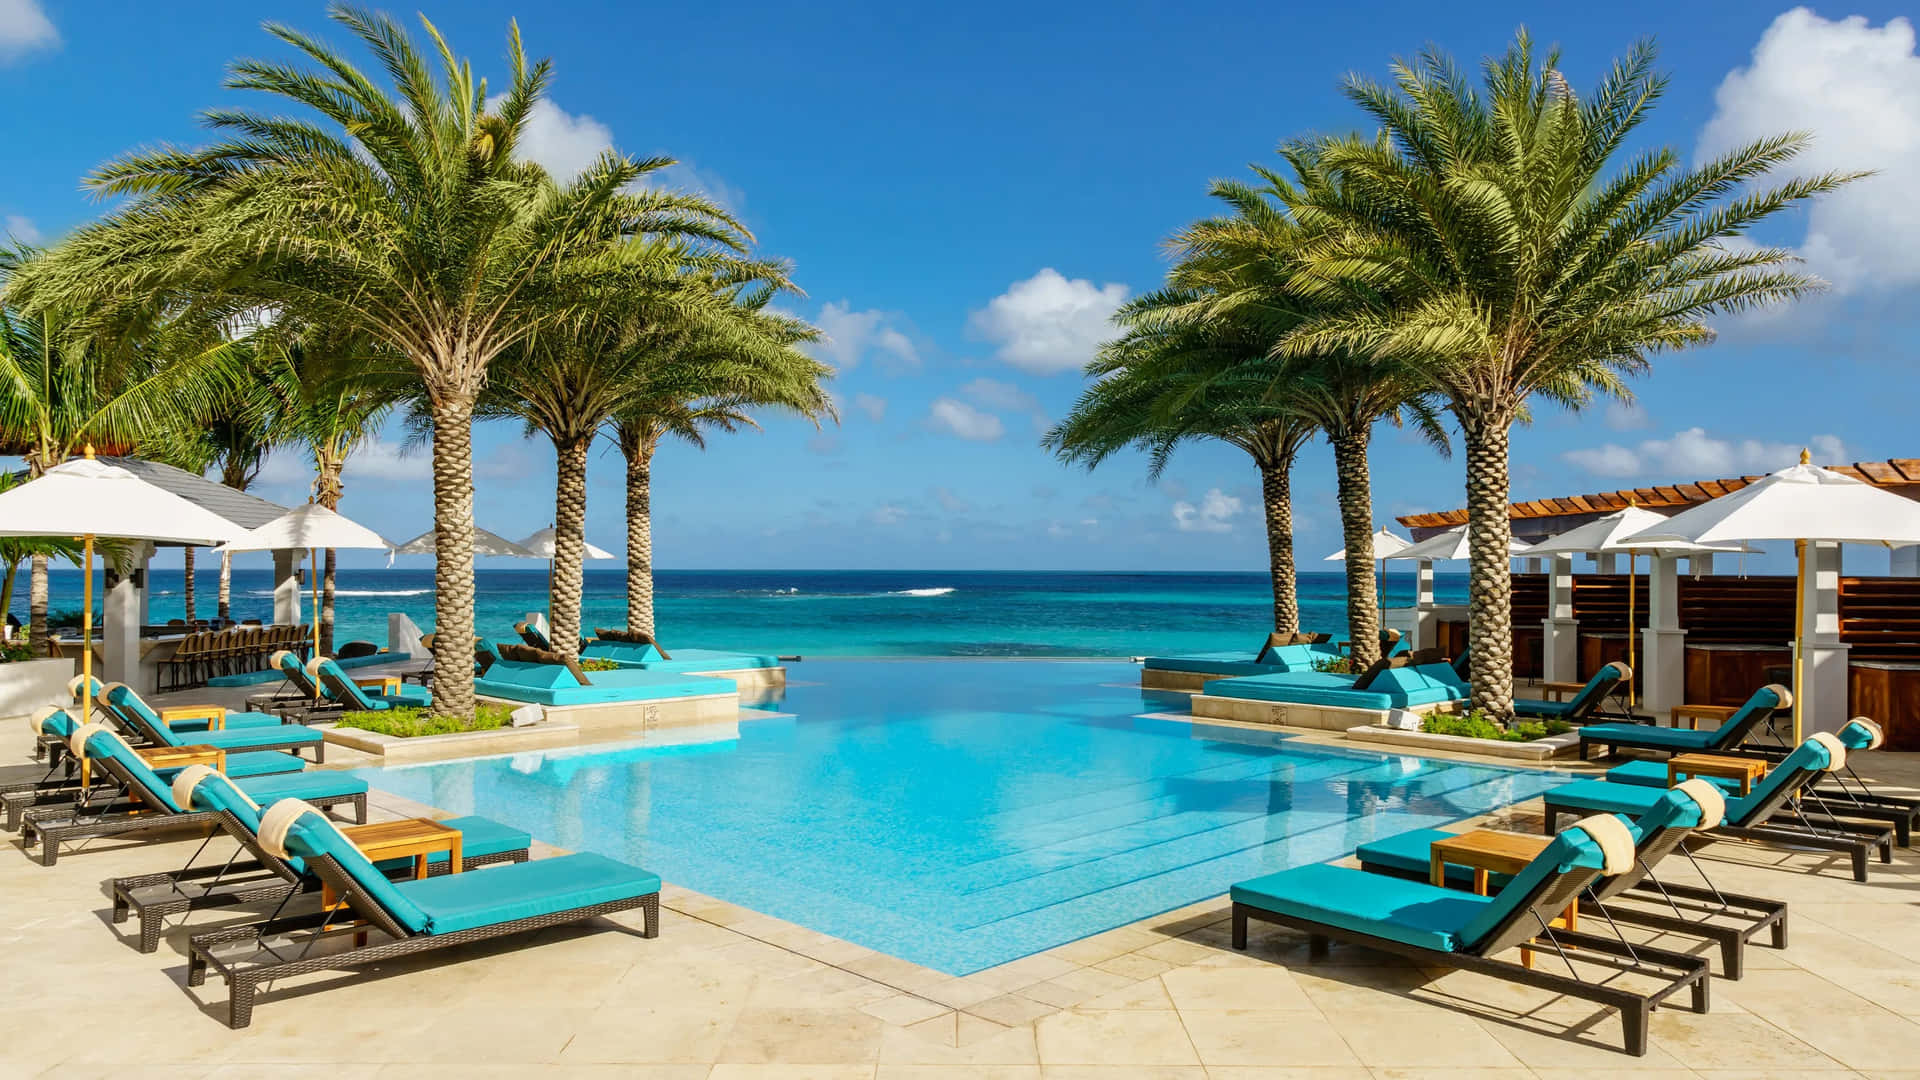 Download Stunning Beach Swimming Pool Overlooking the Ocean Wallpaper ...